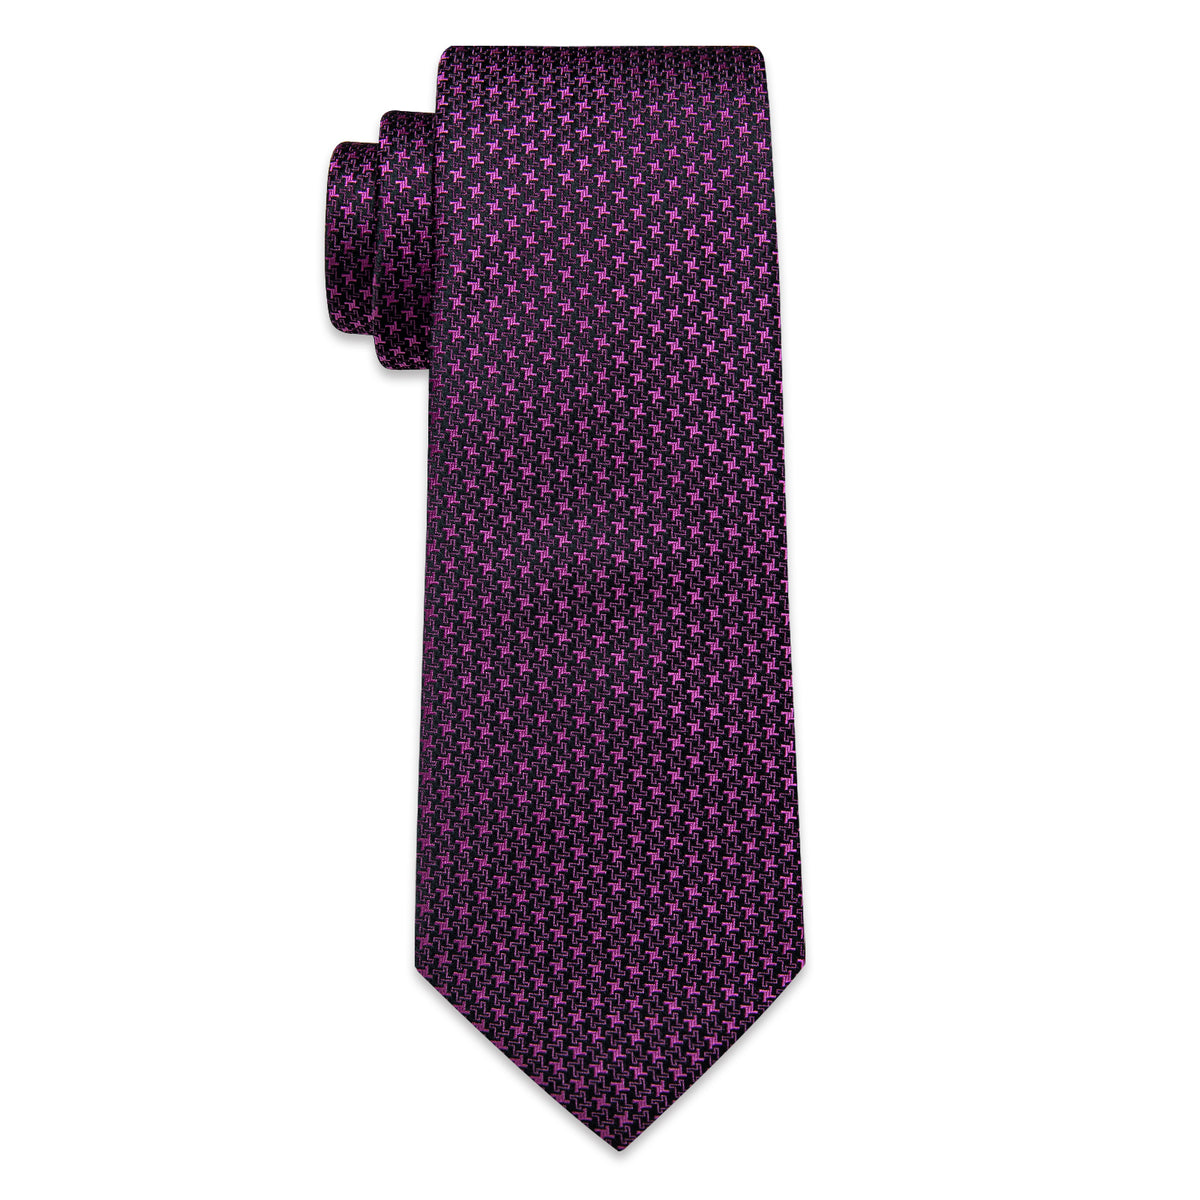 Purple Pink Novelty Woven Men's Necktie Pocket Square Cufflinks Set